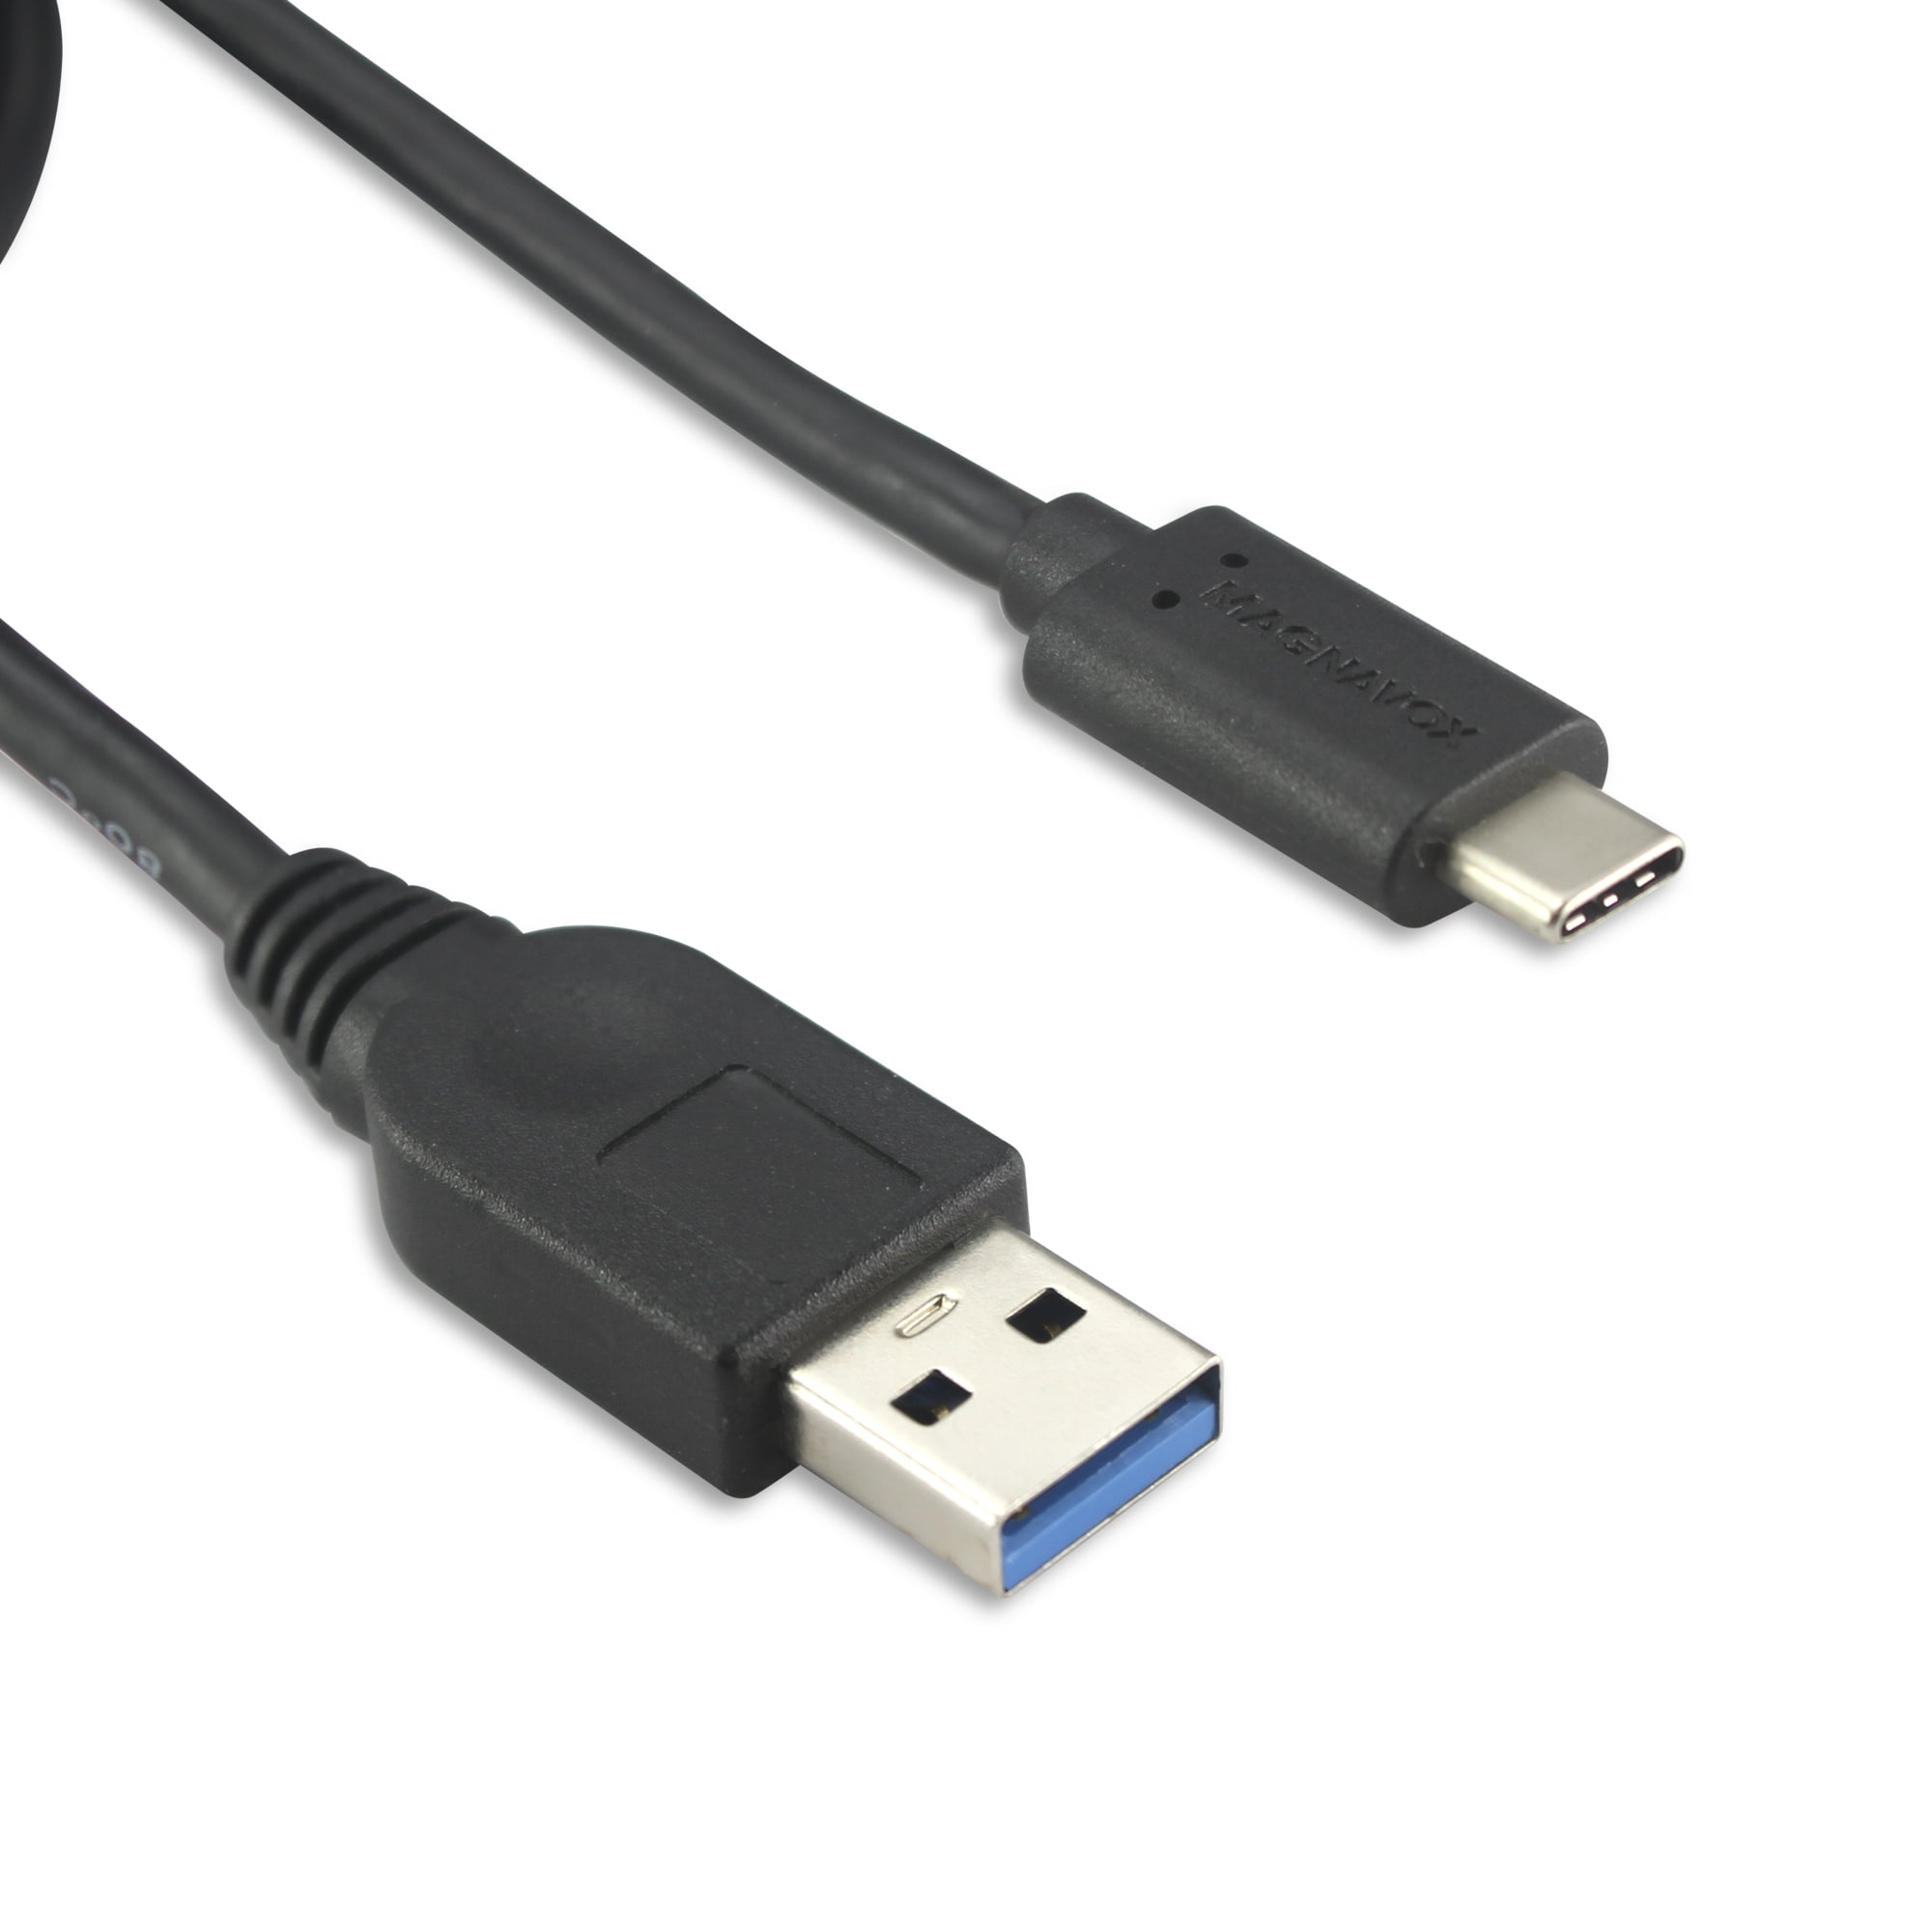 yan USB Cable for Panasonic K1HA05CD0017 SDR H40P SDR H60P 